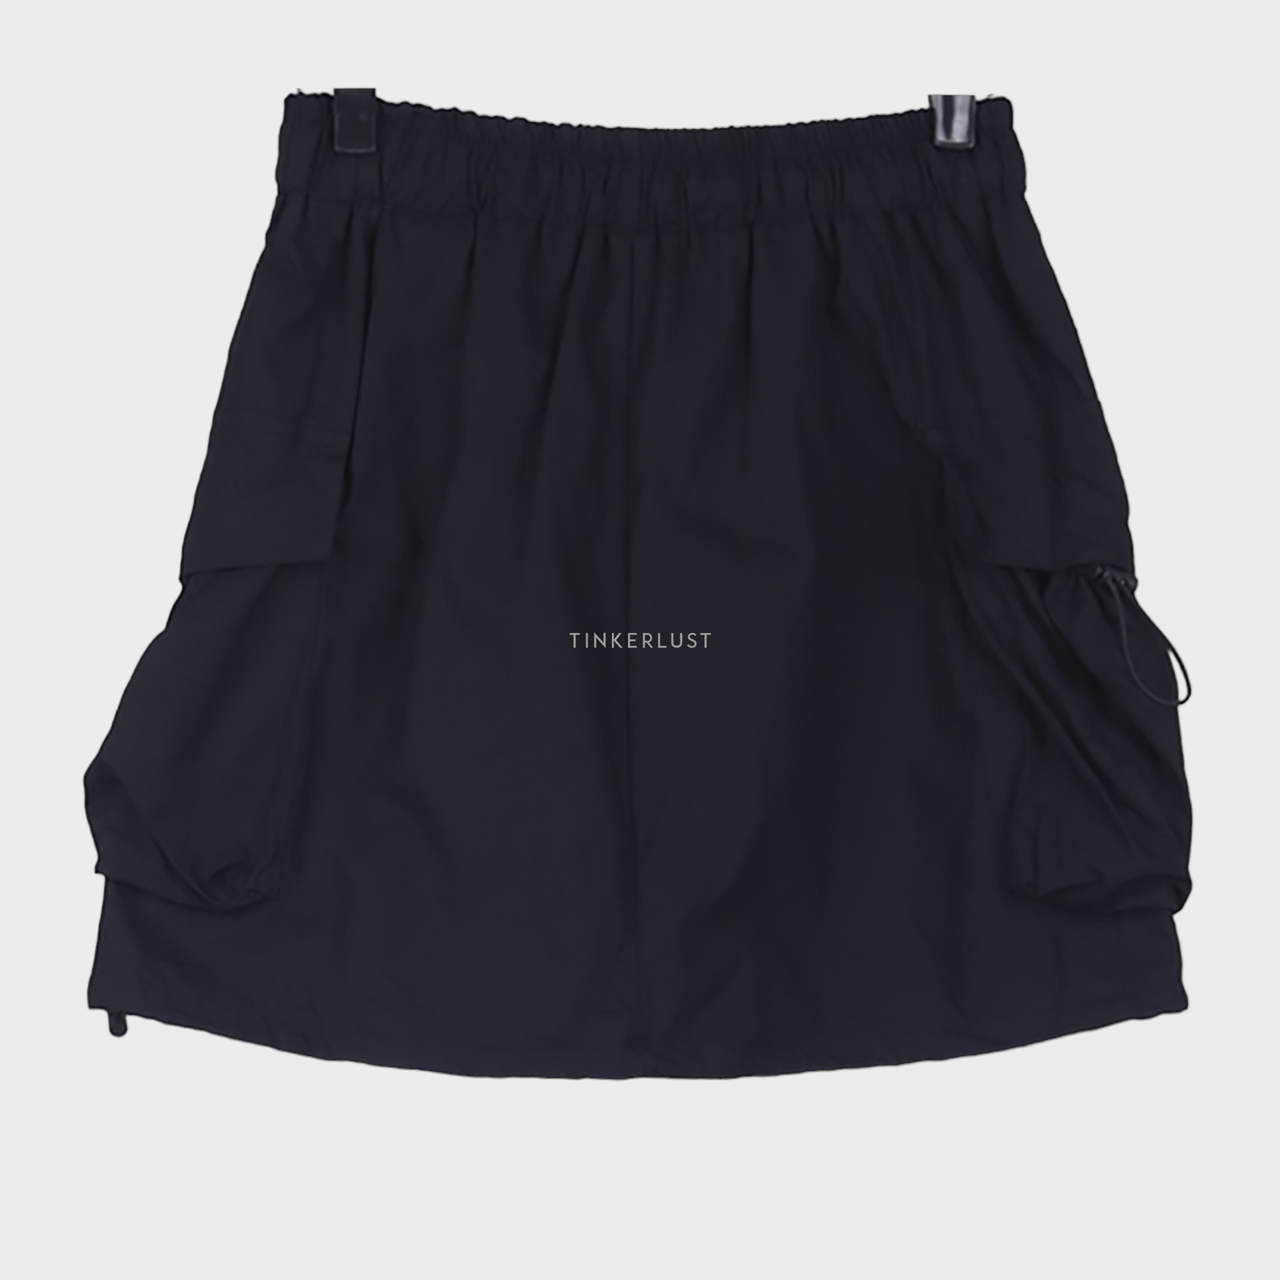 Private Collection Black Skort Pants